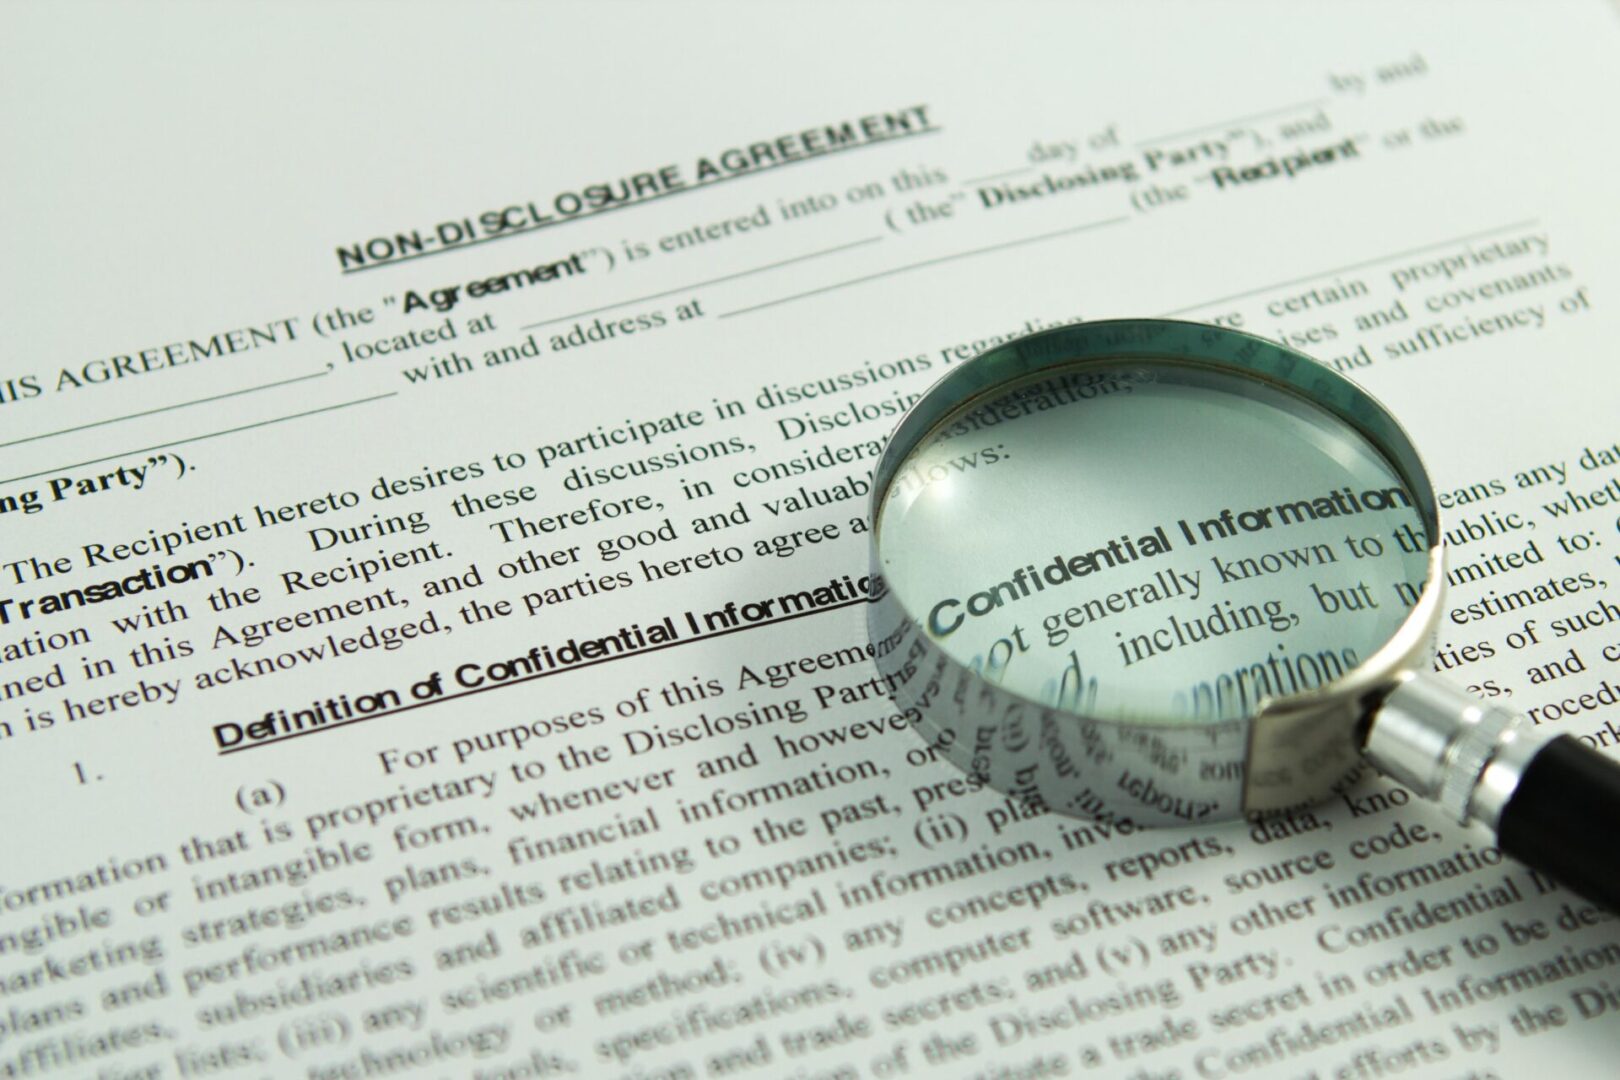 Non-disclosure agreement close examination